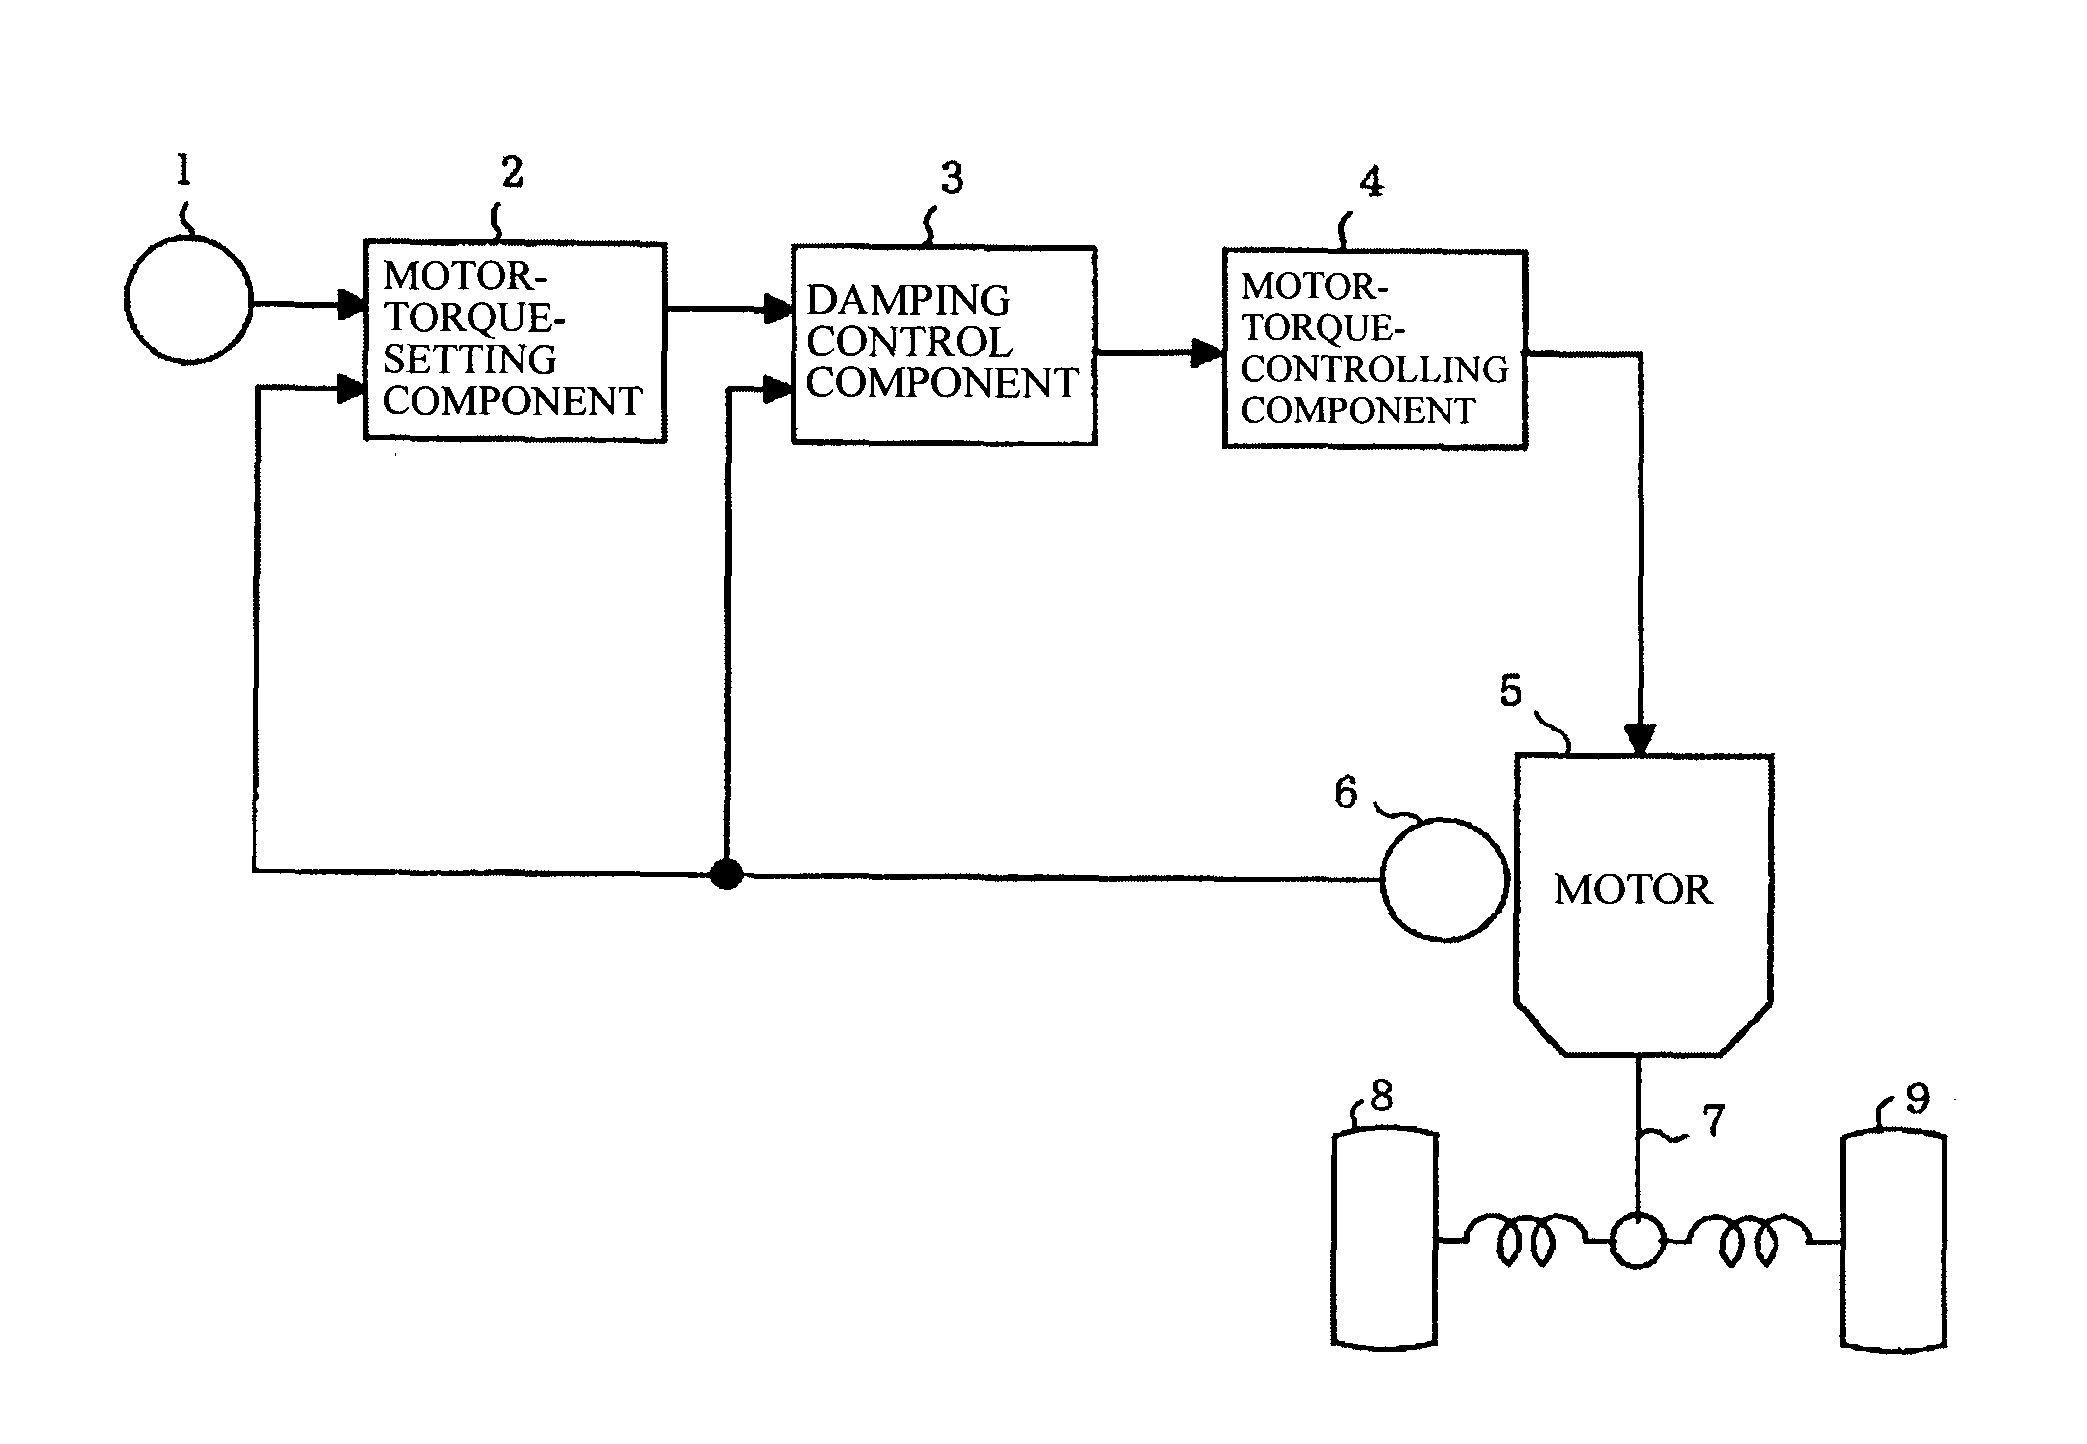 Motor controlling apparatus